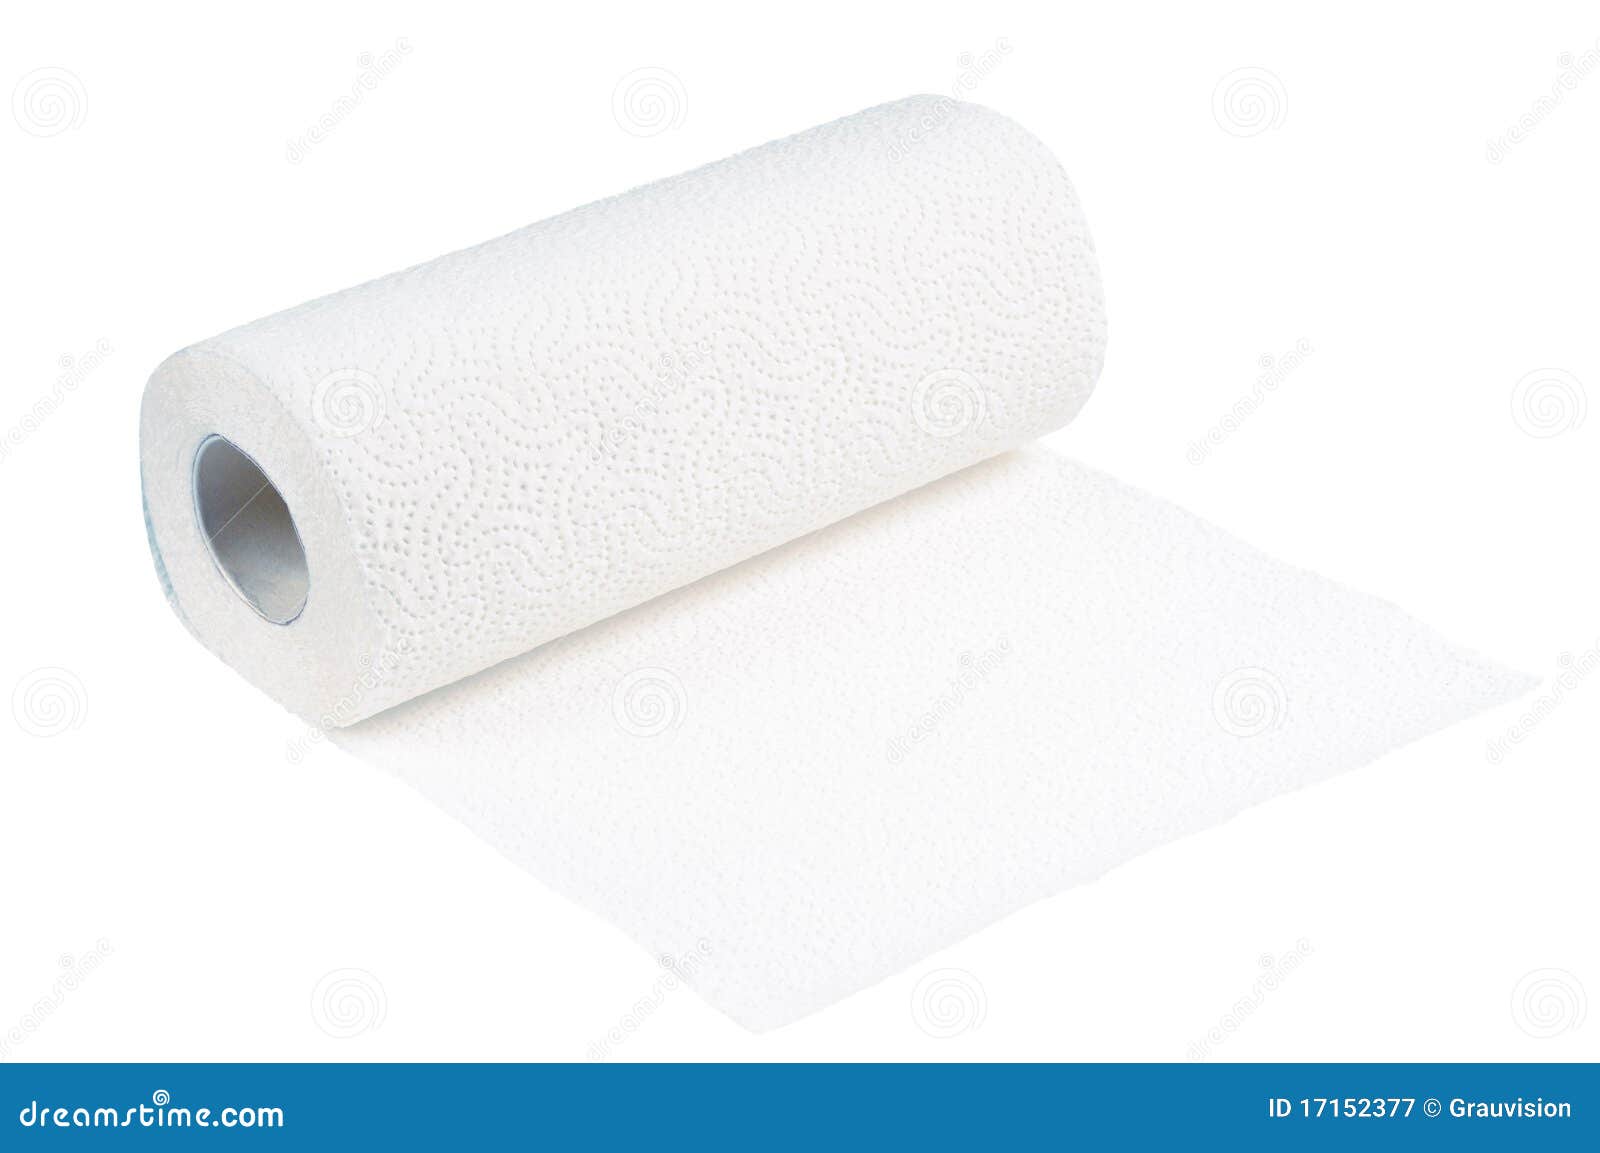 clipart paper towels - photo #23